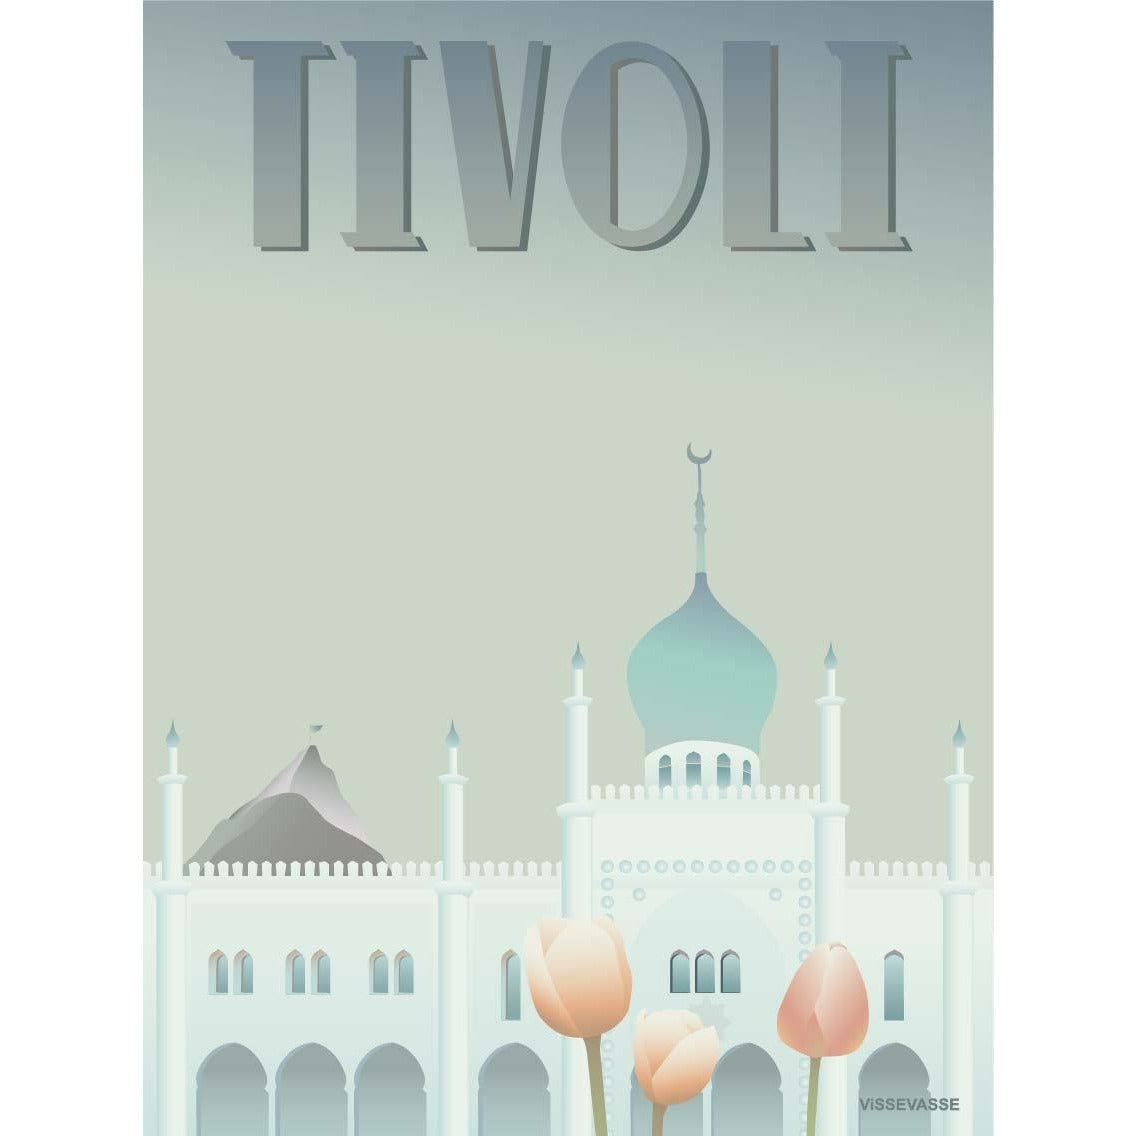 Vissevasse Tivoli nimb affisch, 30x40 cm